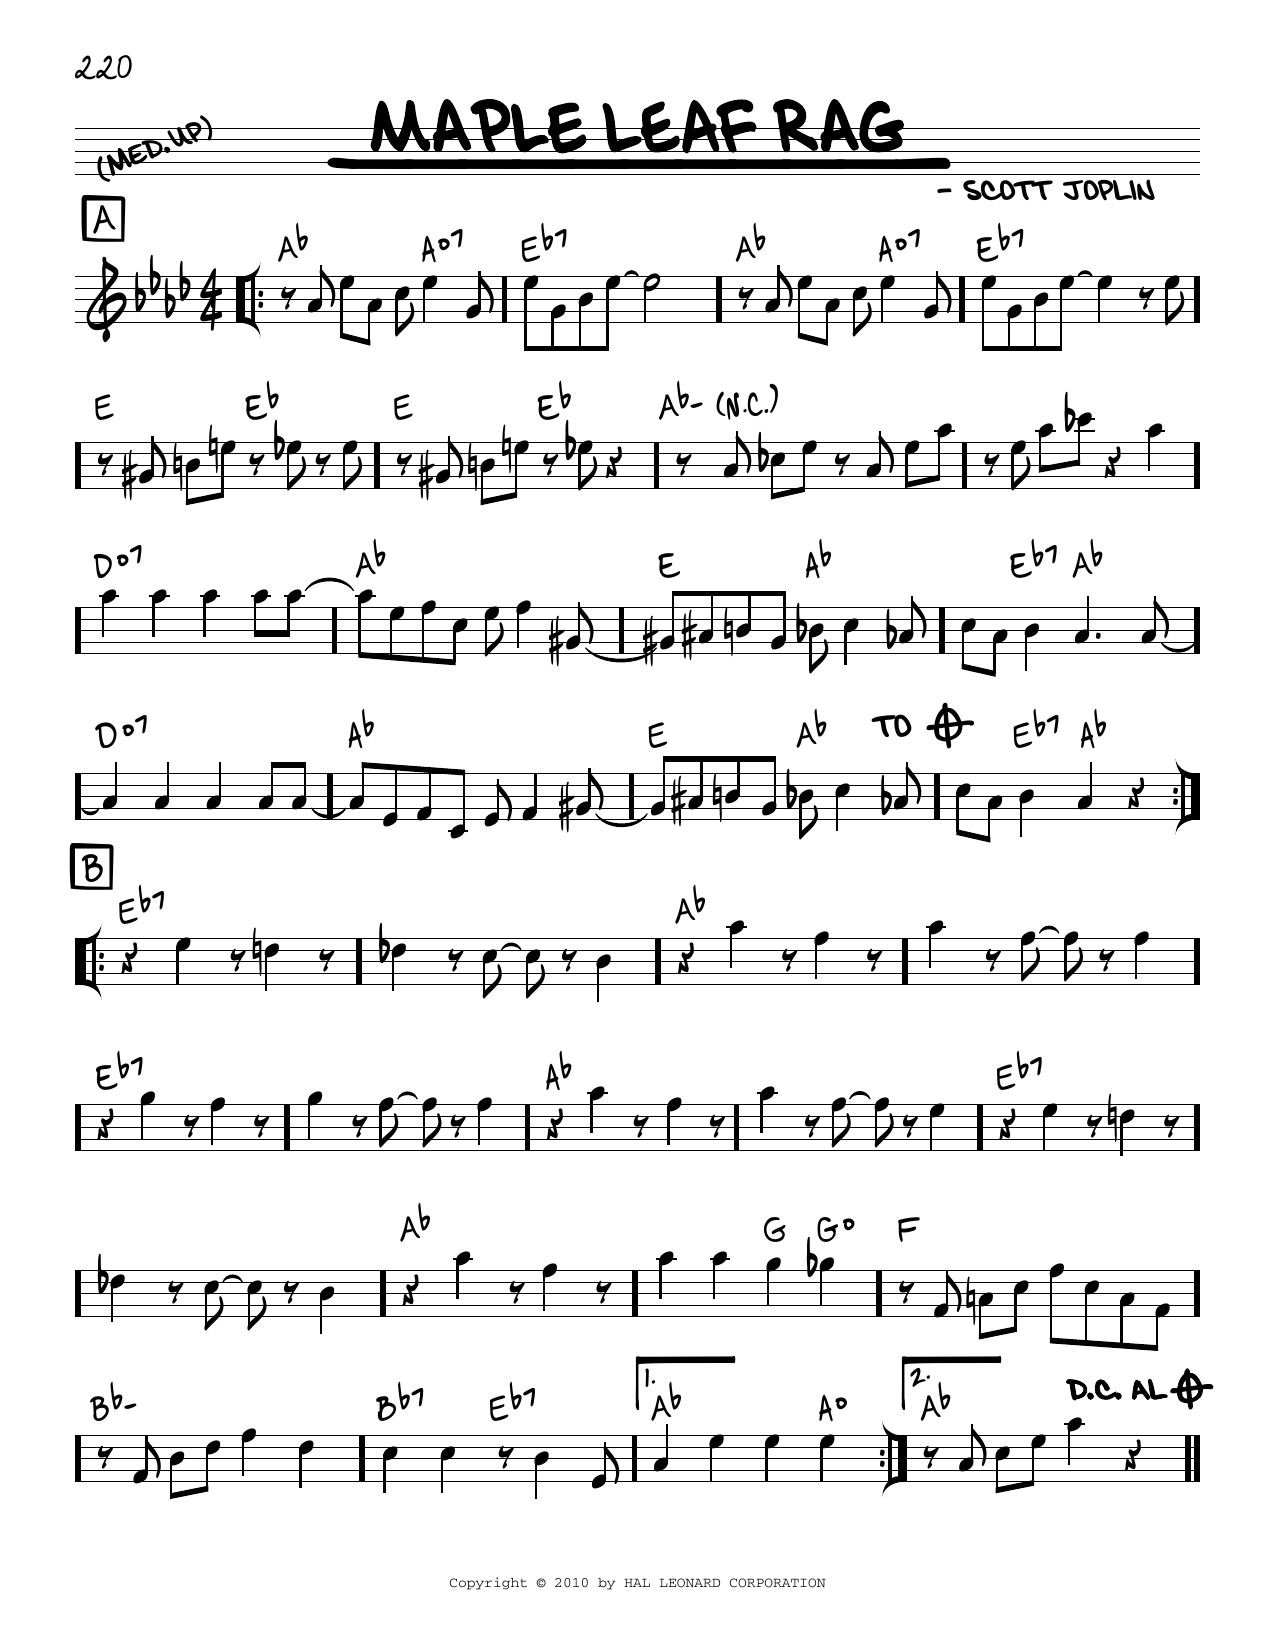 Scott Joplin Maple Leaf Rag (arr. Robert Rawlins) Sheet Music Notes & Chords for Real Book – Melody, Lyrics & Chords - Download or Print PDF